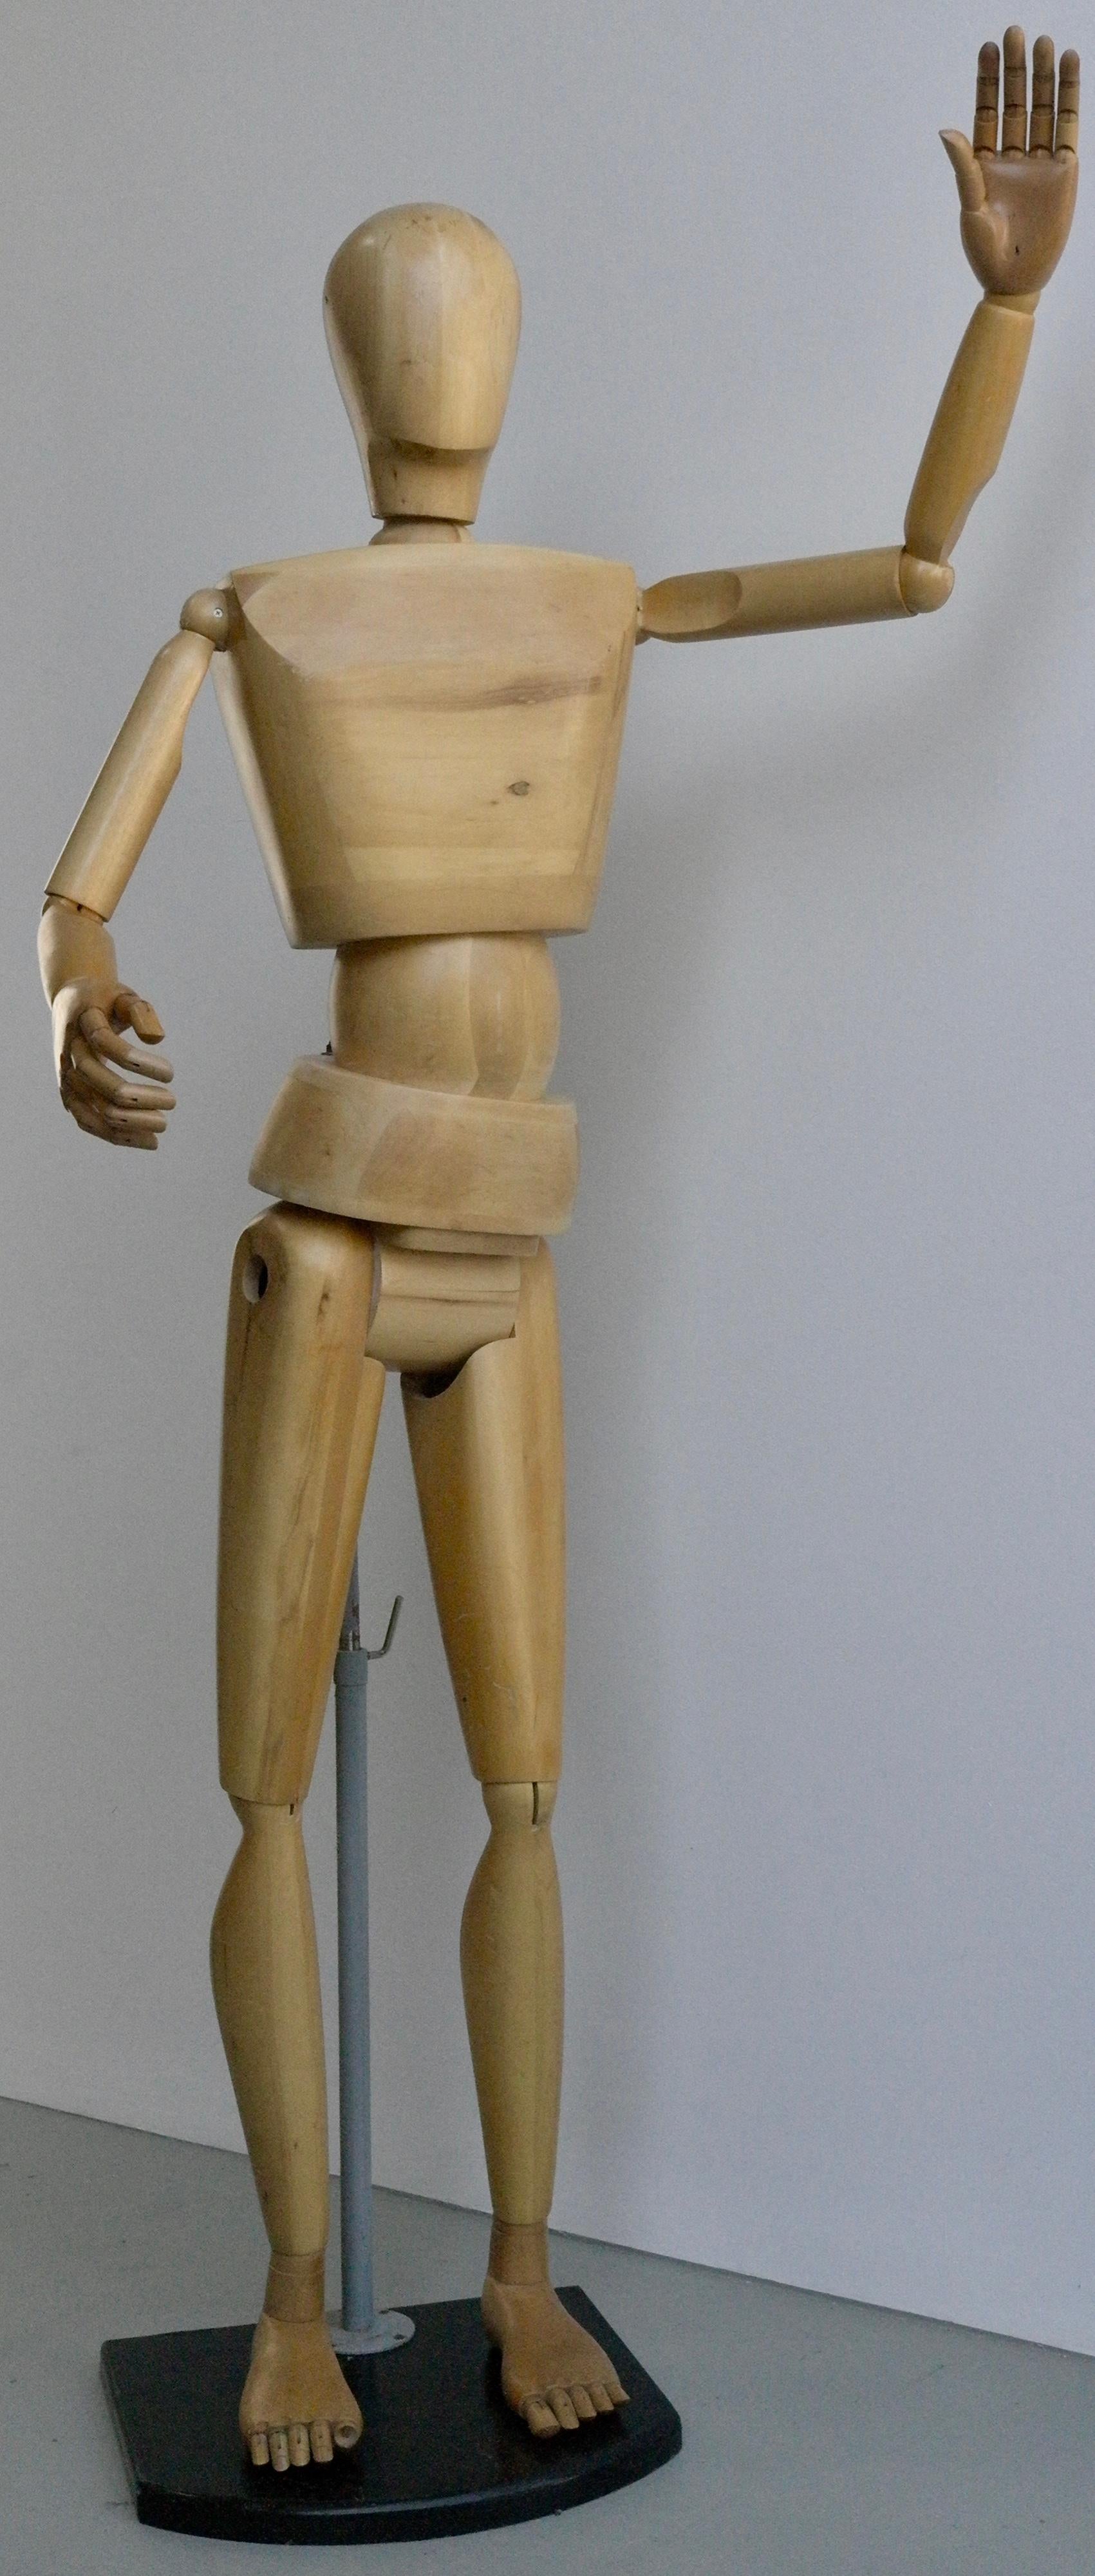 wooden mannequin full size